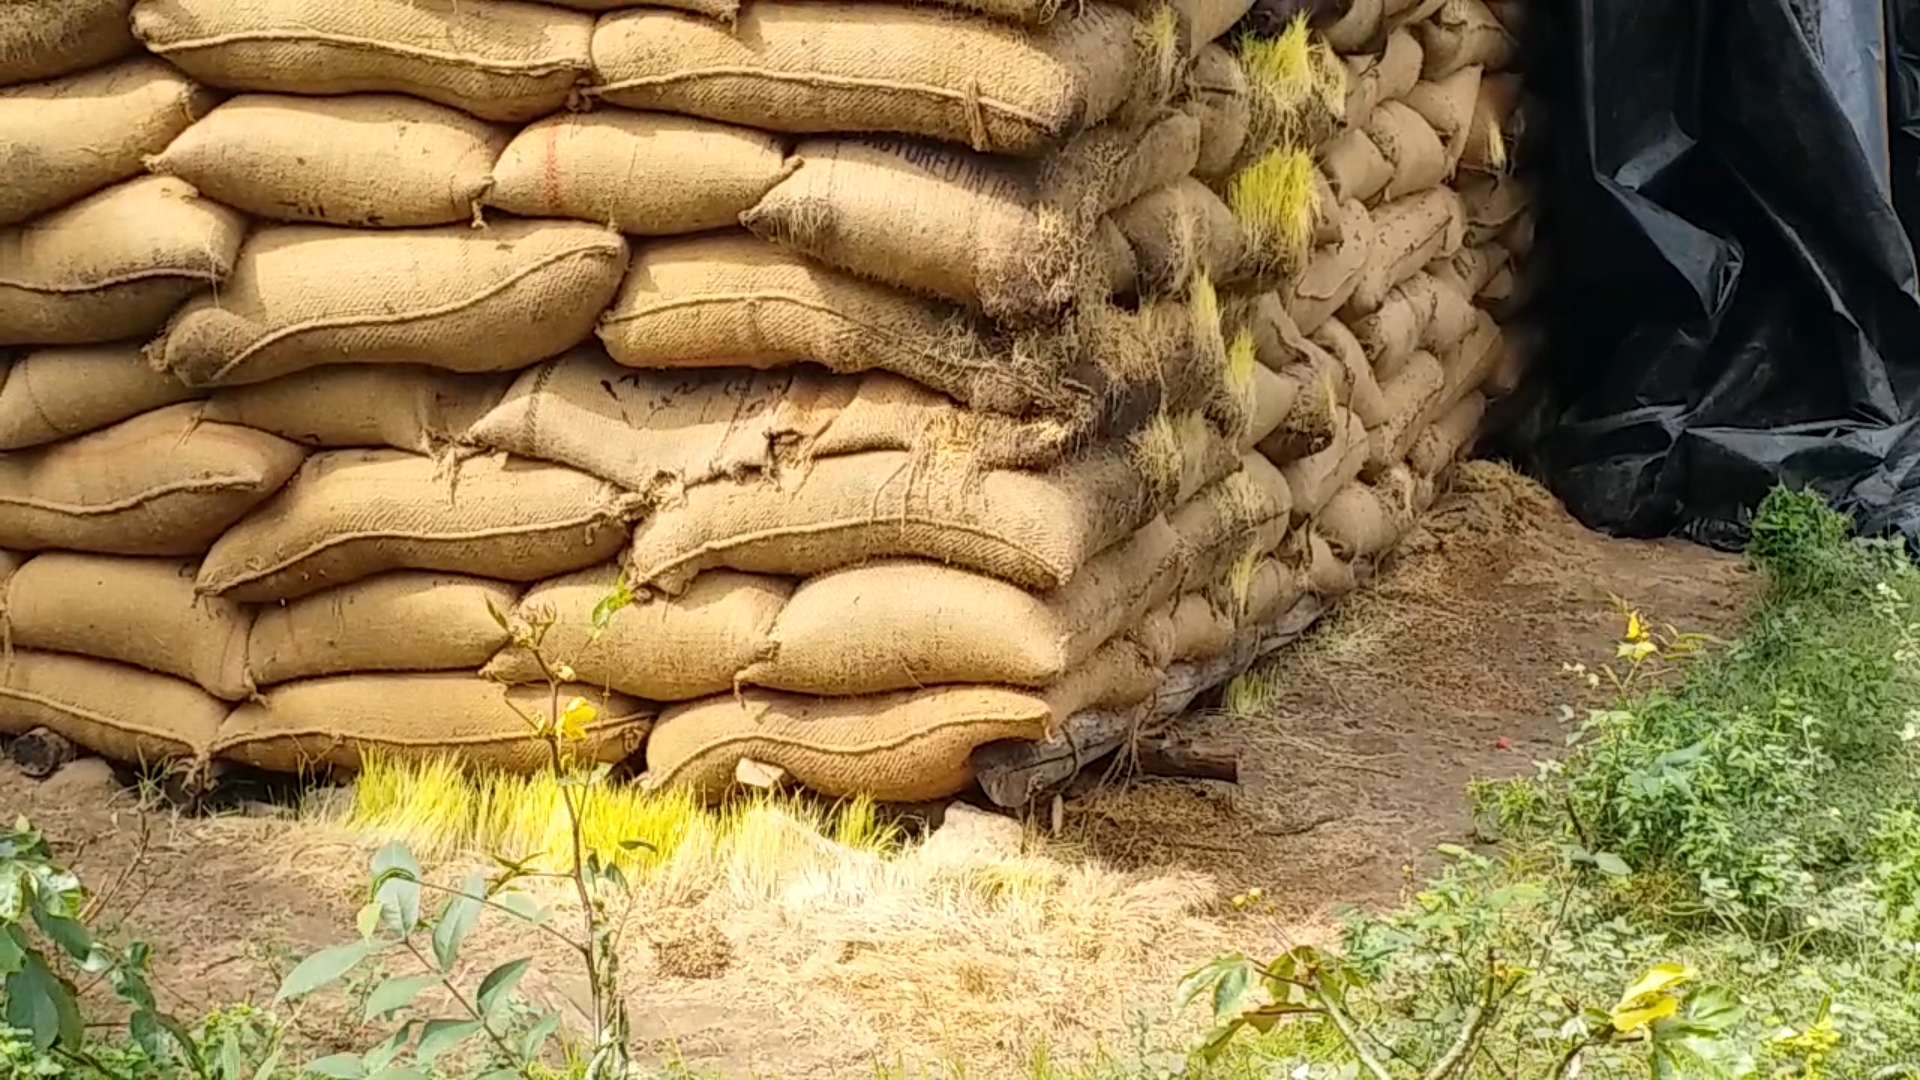 10 thousand tons of paddy bundles damaged without maintenance in Nagapattinam